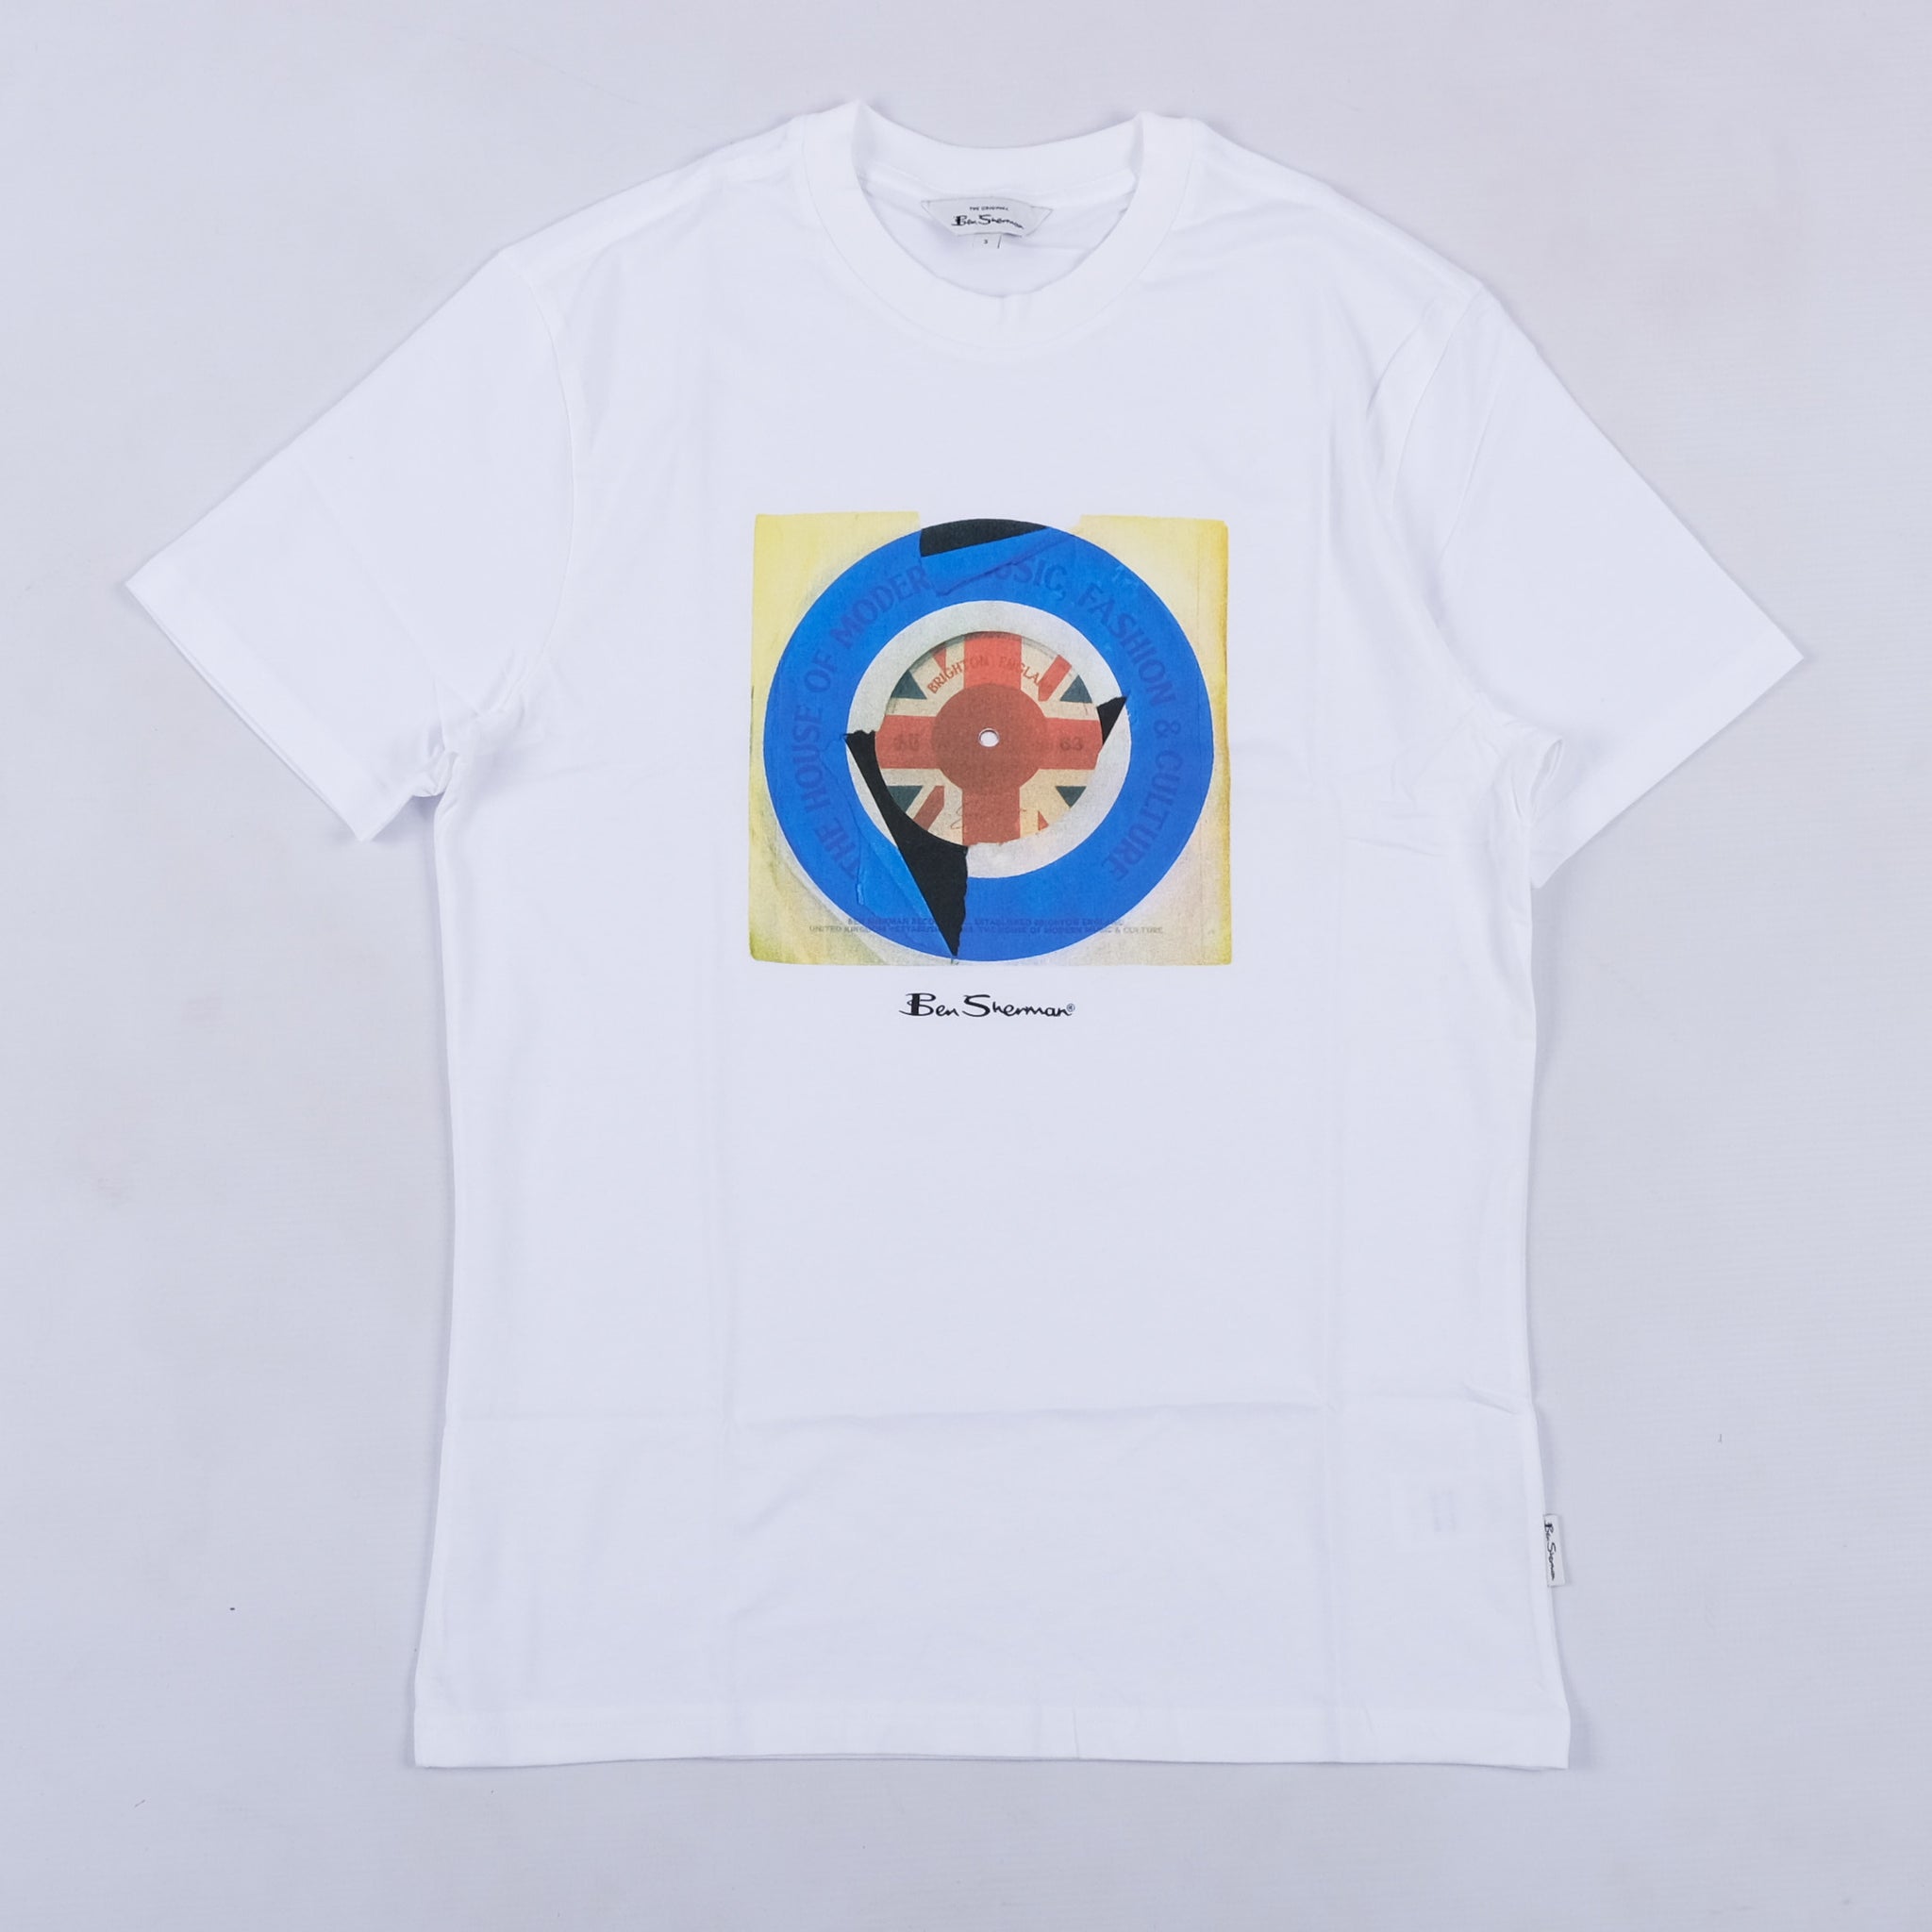 45 Record Target T-Shirt (White)